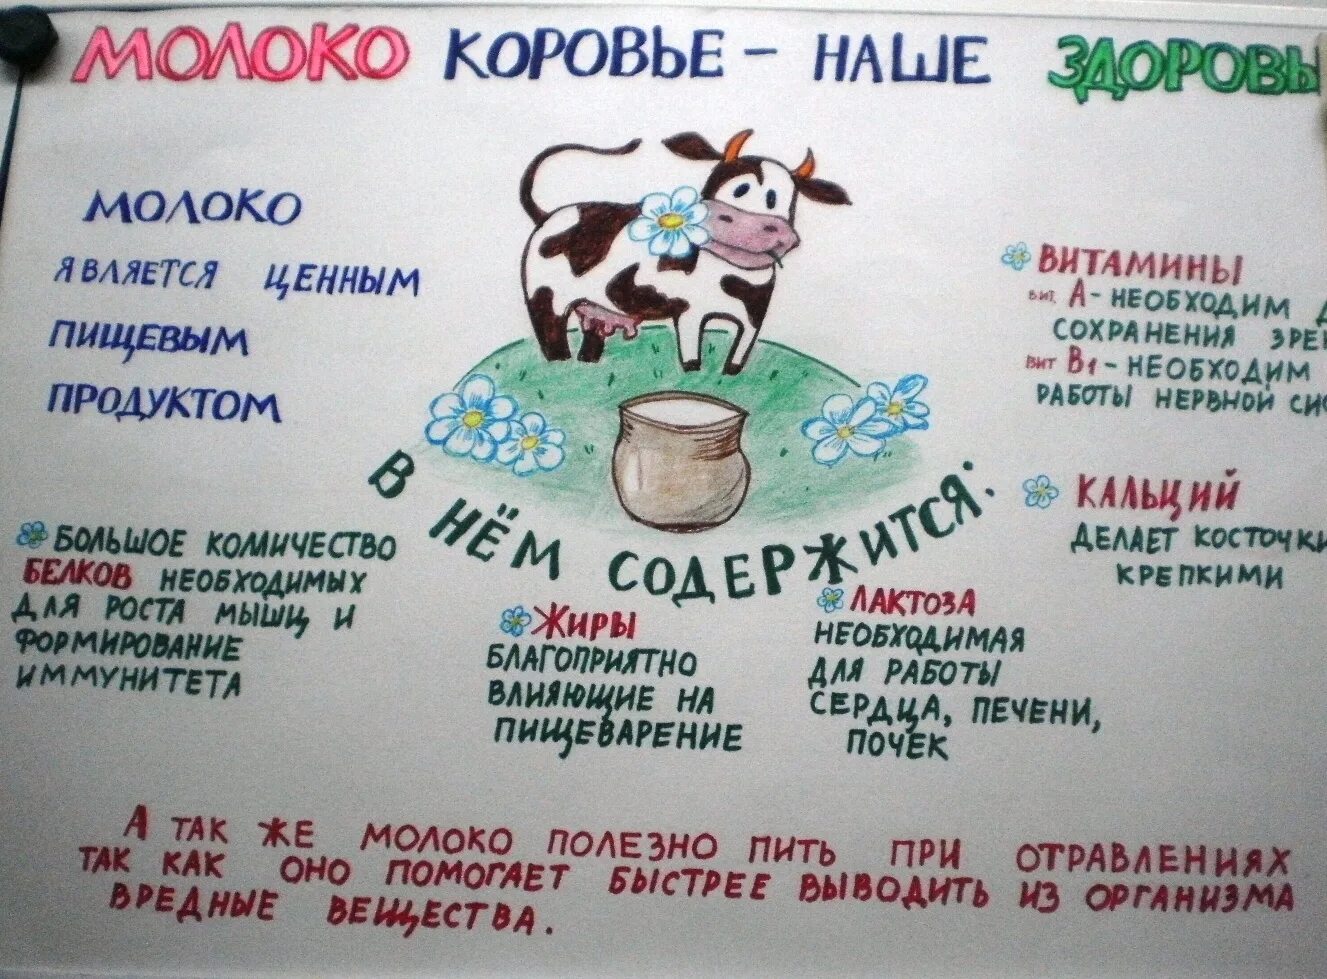 Реклама молочной продукции. Лозунг для молочной продукции. Слоган для молочного продукта. Слоган для молочной продукции.